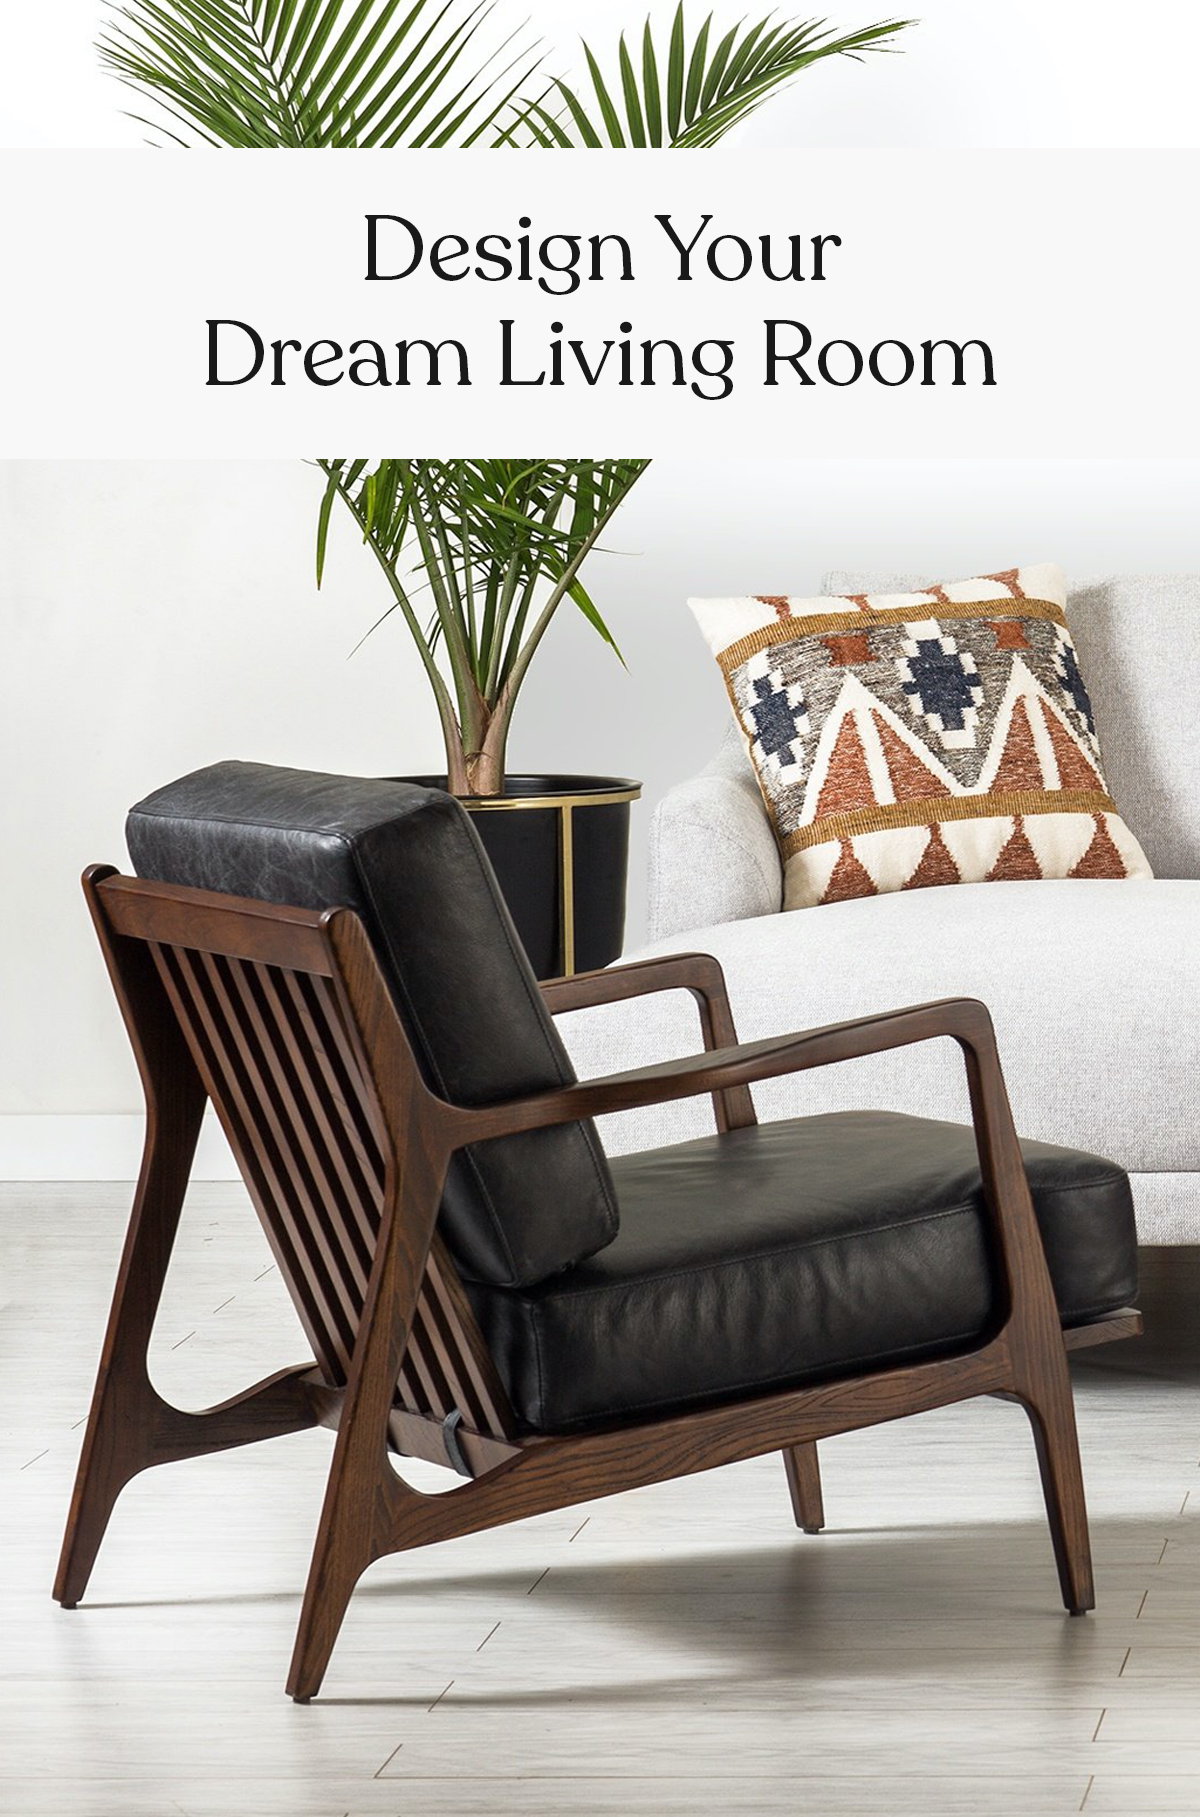 Design Your Dream Living Room